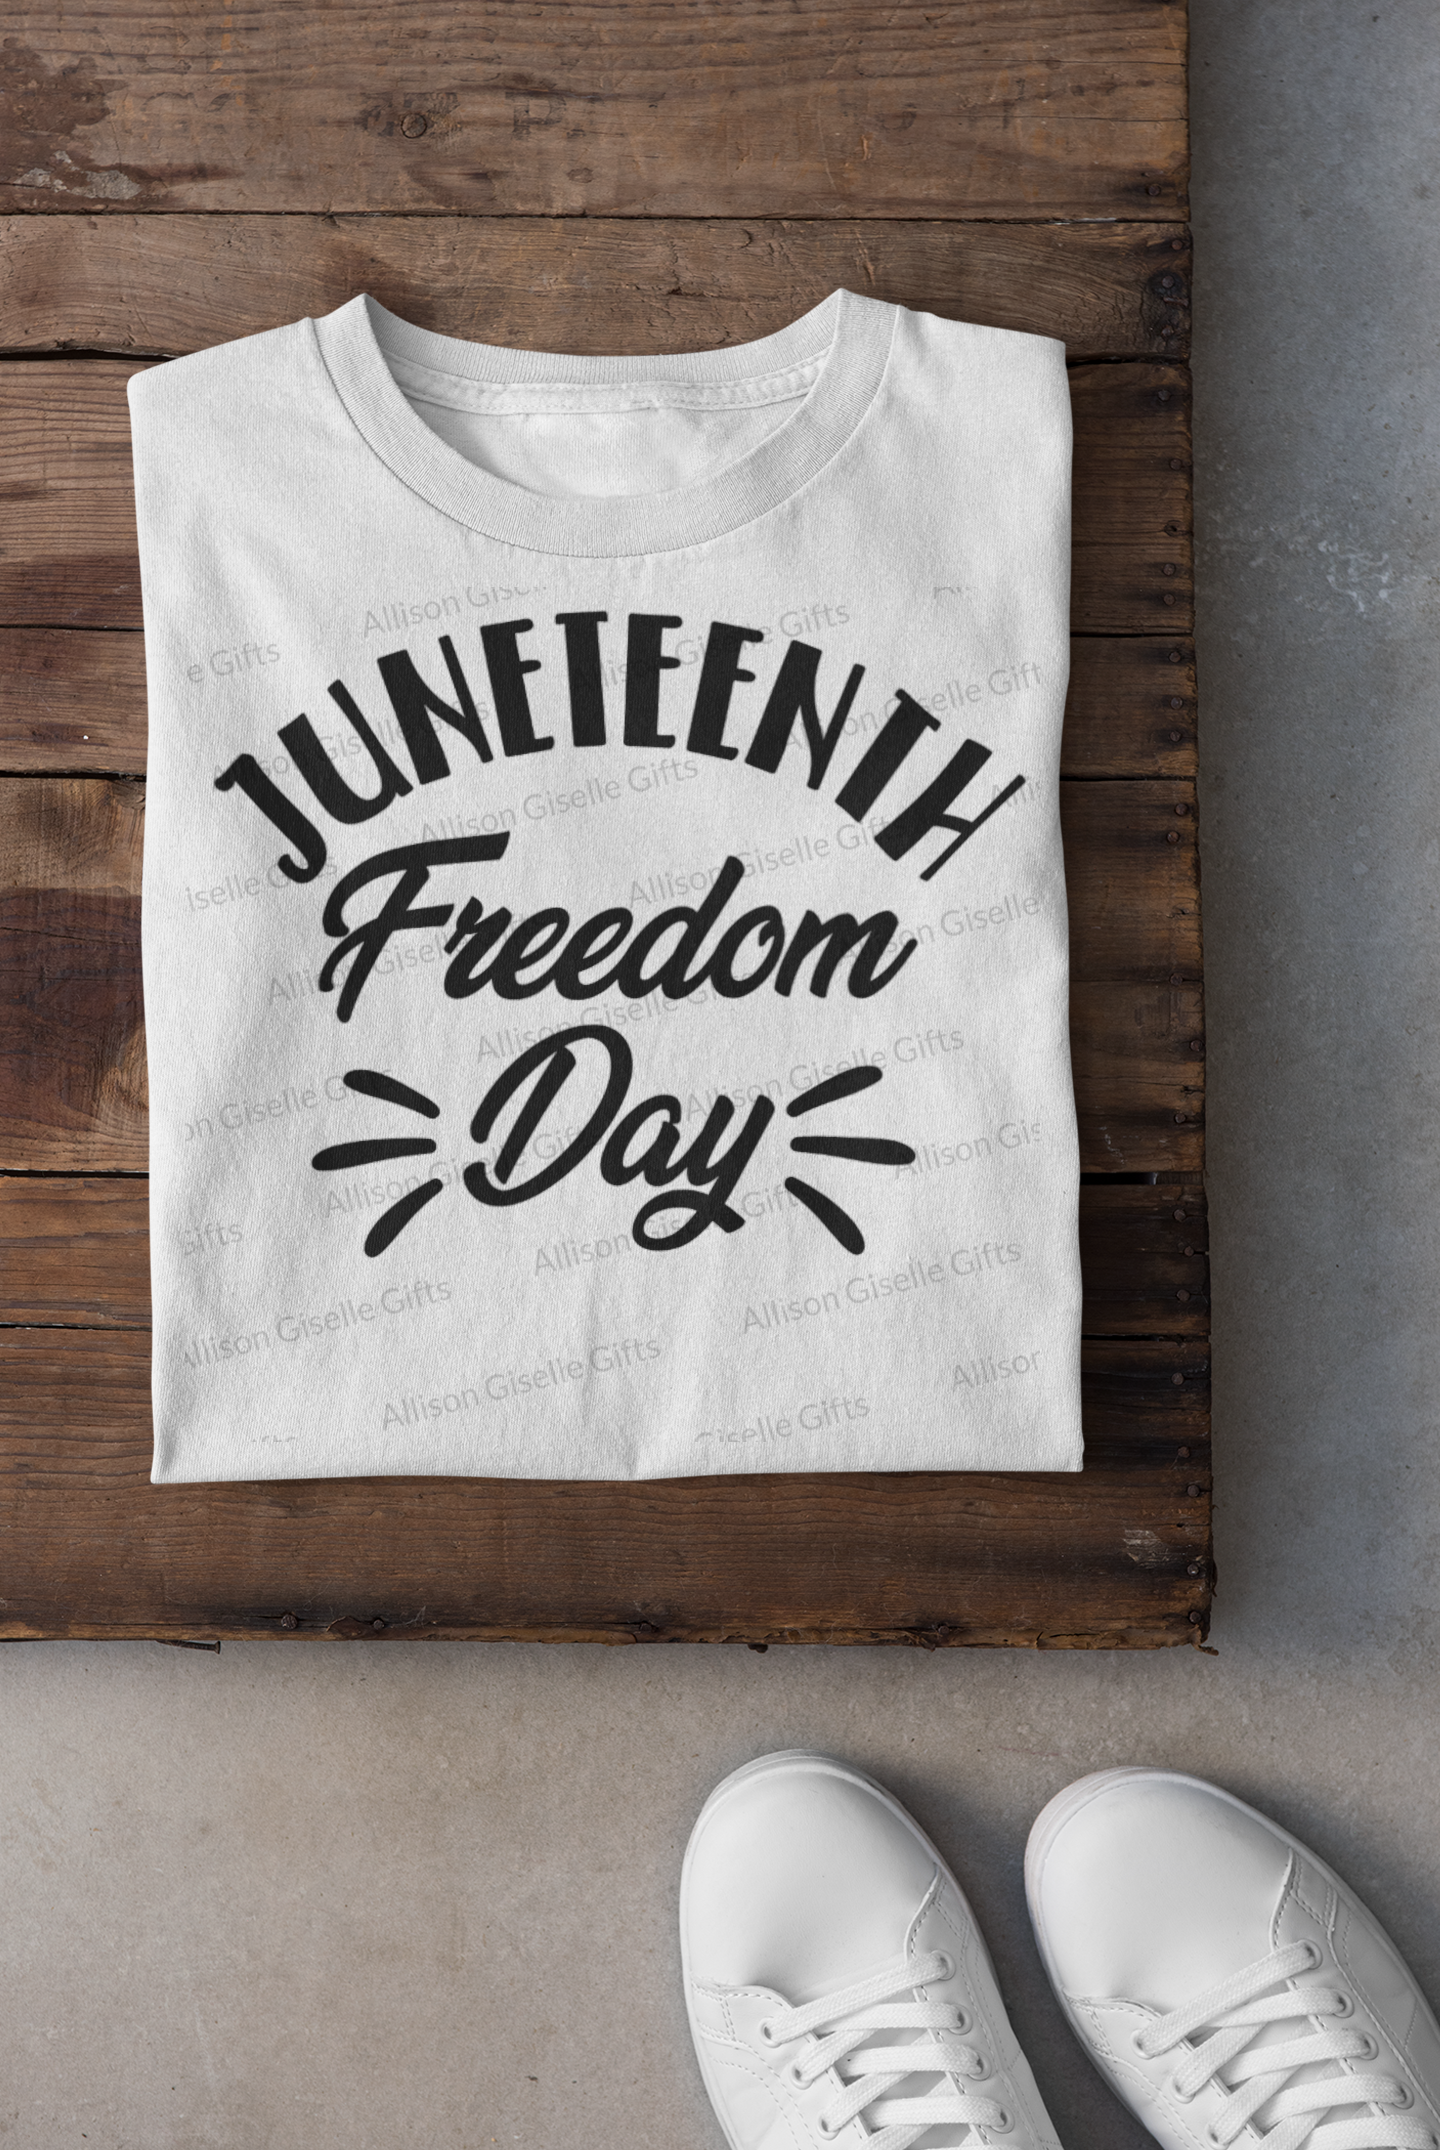 Juneteenth Freedom Day T-Shirt, Celebration Shirt, Freedom Day Shirt, 1865 Shirt, Black Owned Shirt